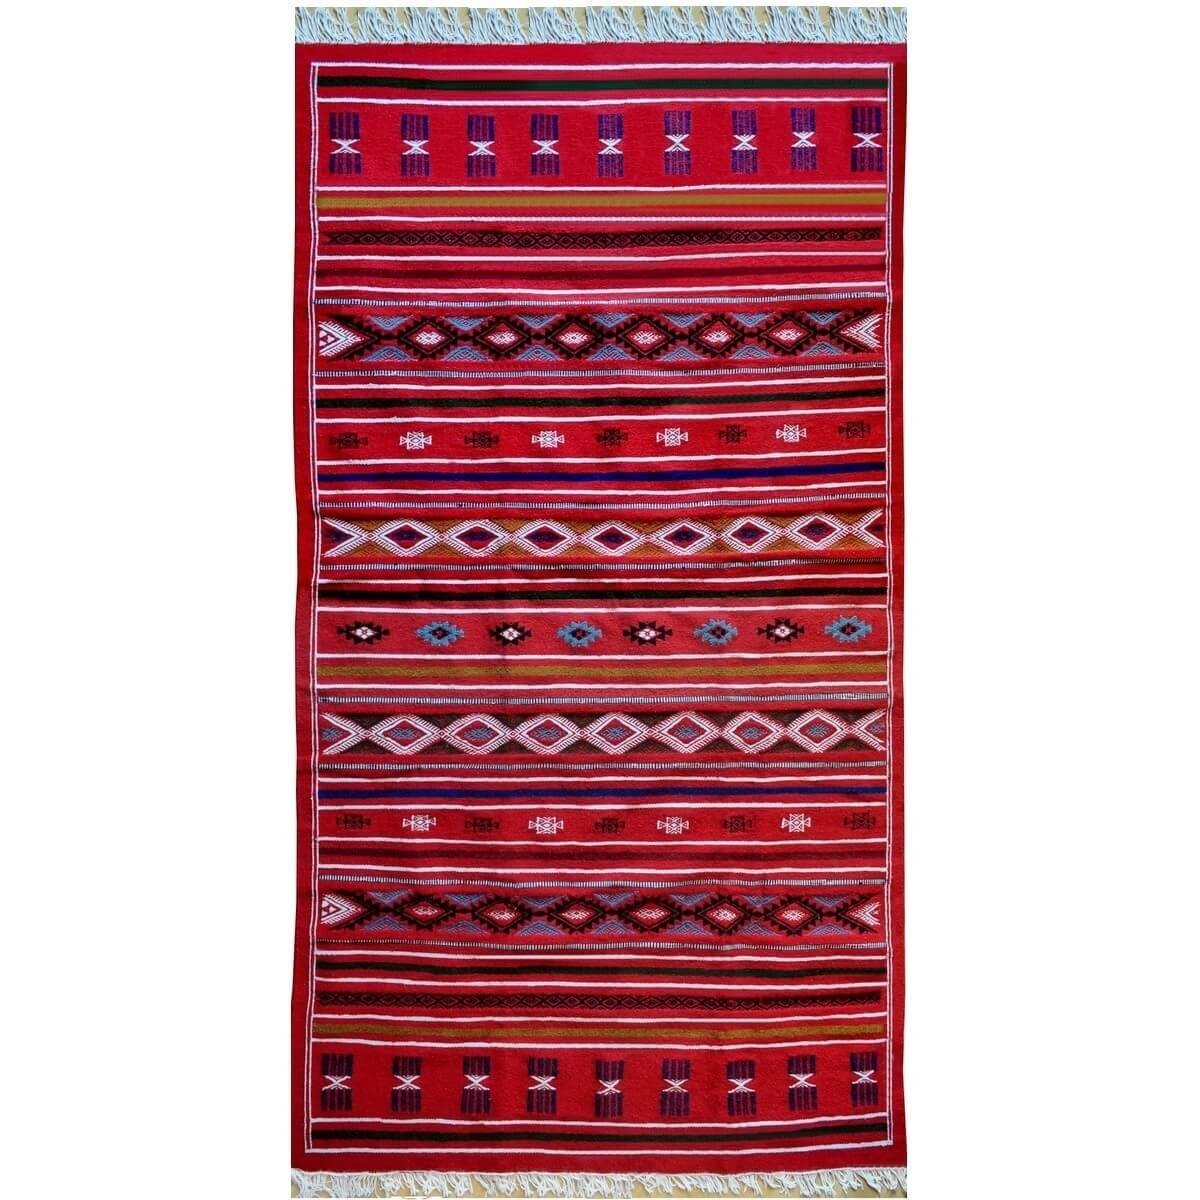 Berber tapijt Tapijt Kilim Soumoud 137x240 Rood/Jeel/Blauw (Handgeweven, Wol, Tunesië) Tunesisch kilimdeken, Marokkaanse stijl. 